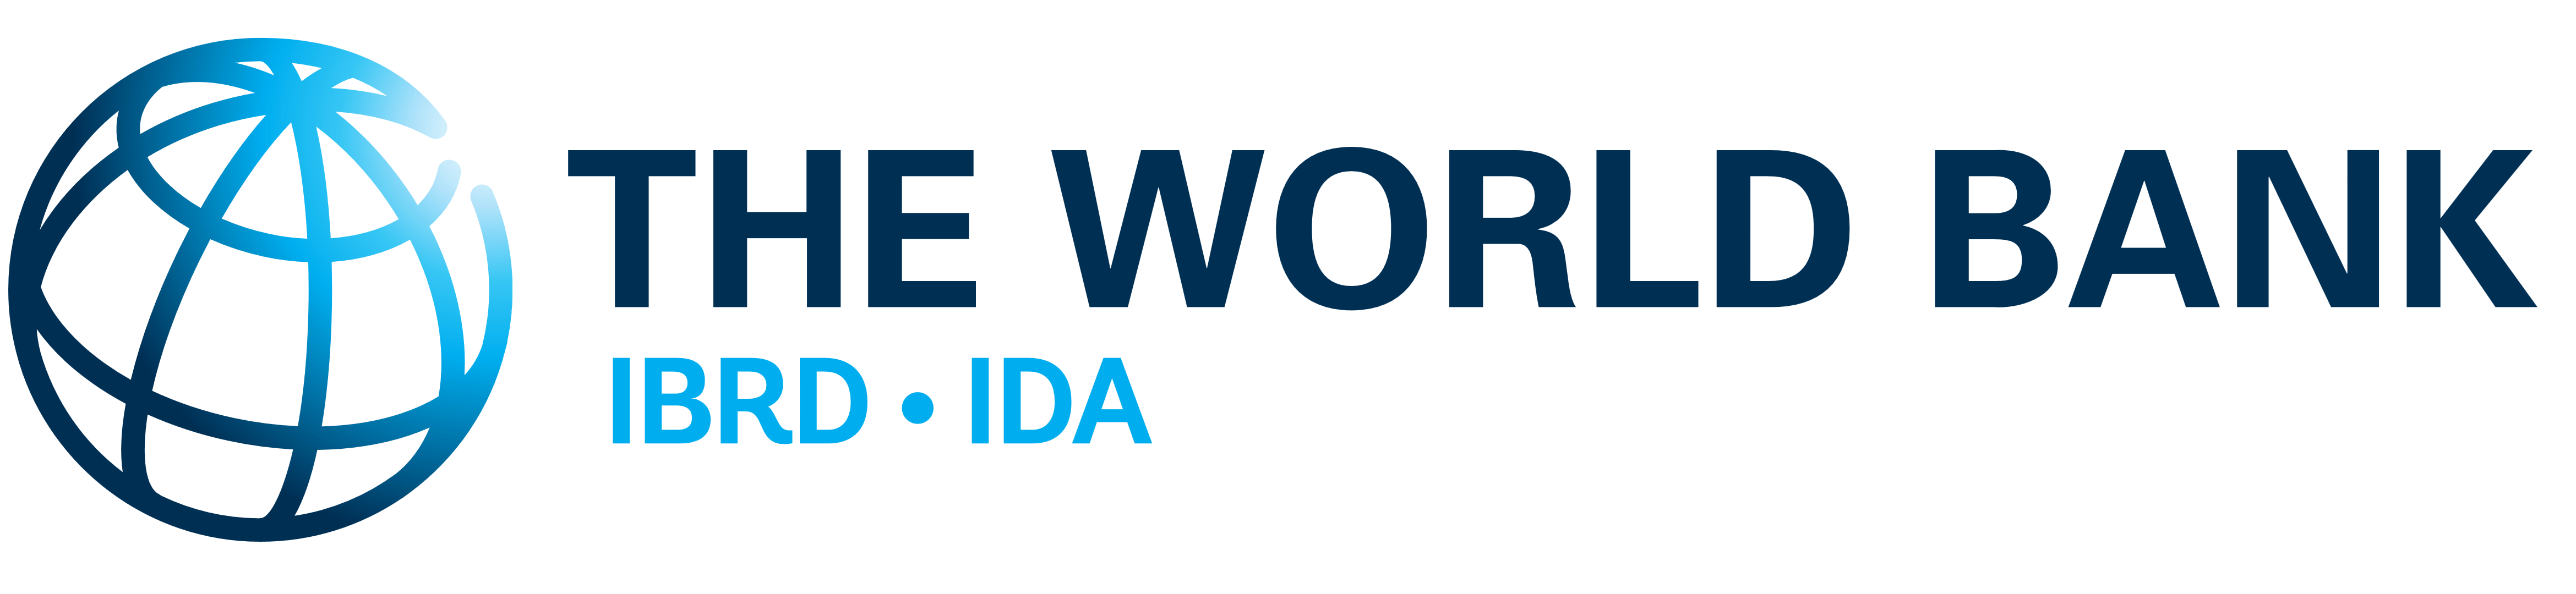 The World Bank logo, logotype